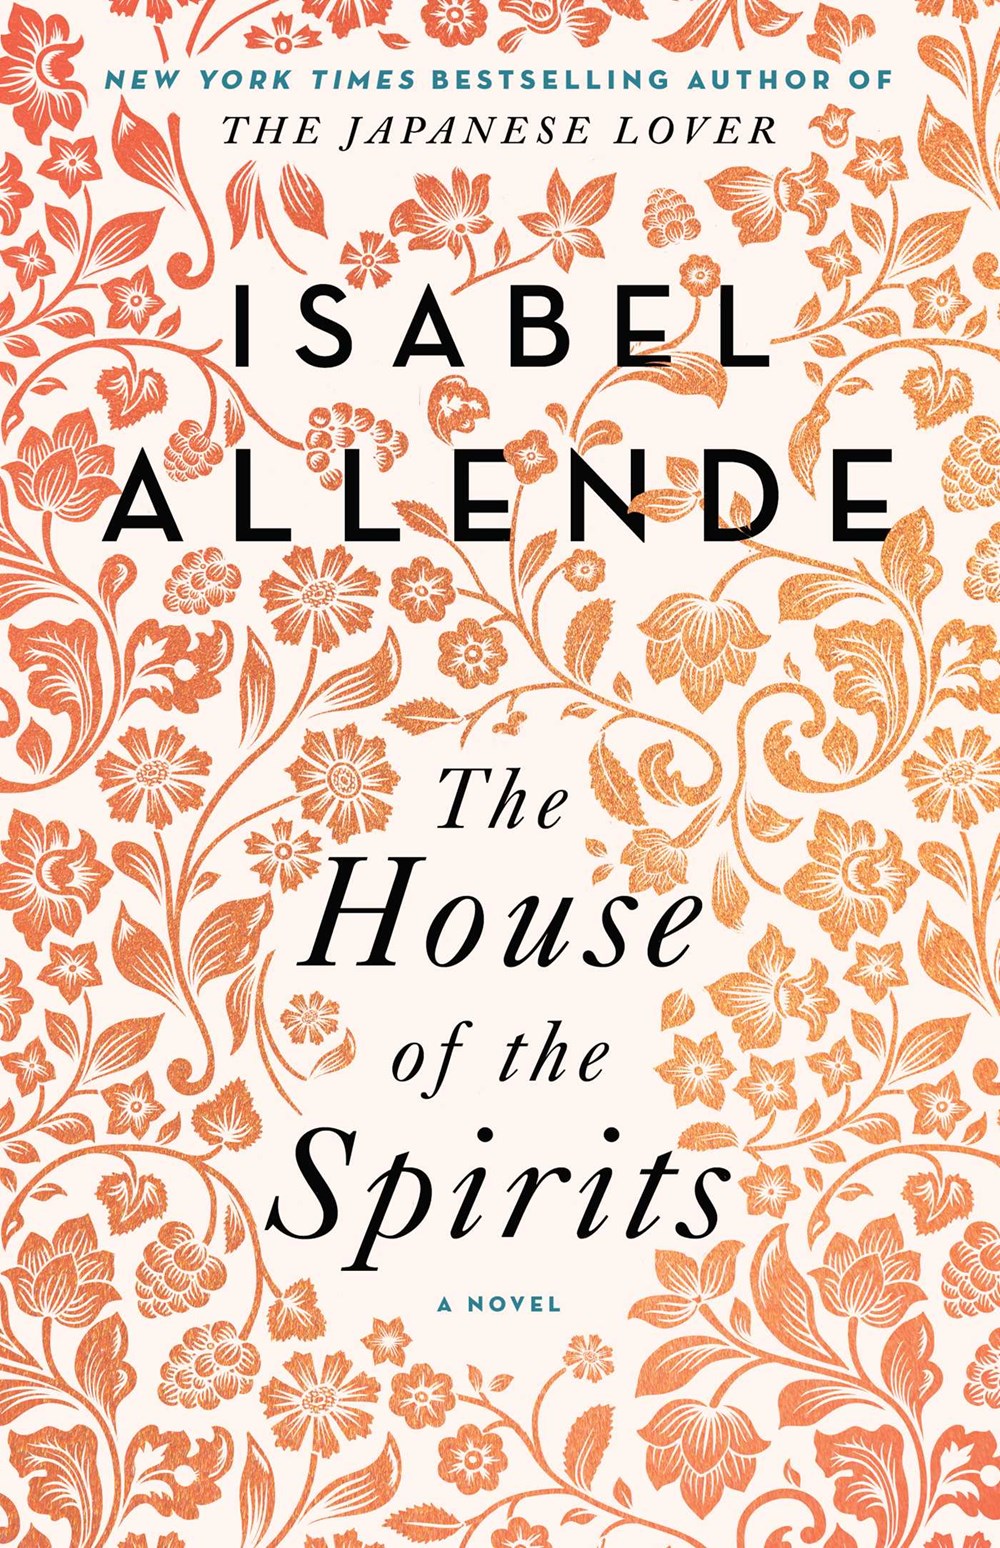 The House of the Spirits : A Novel